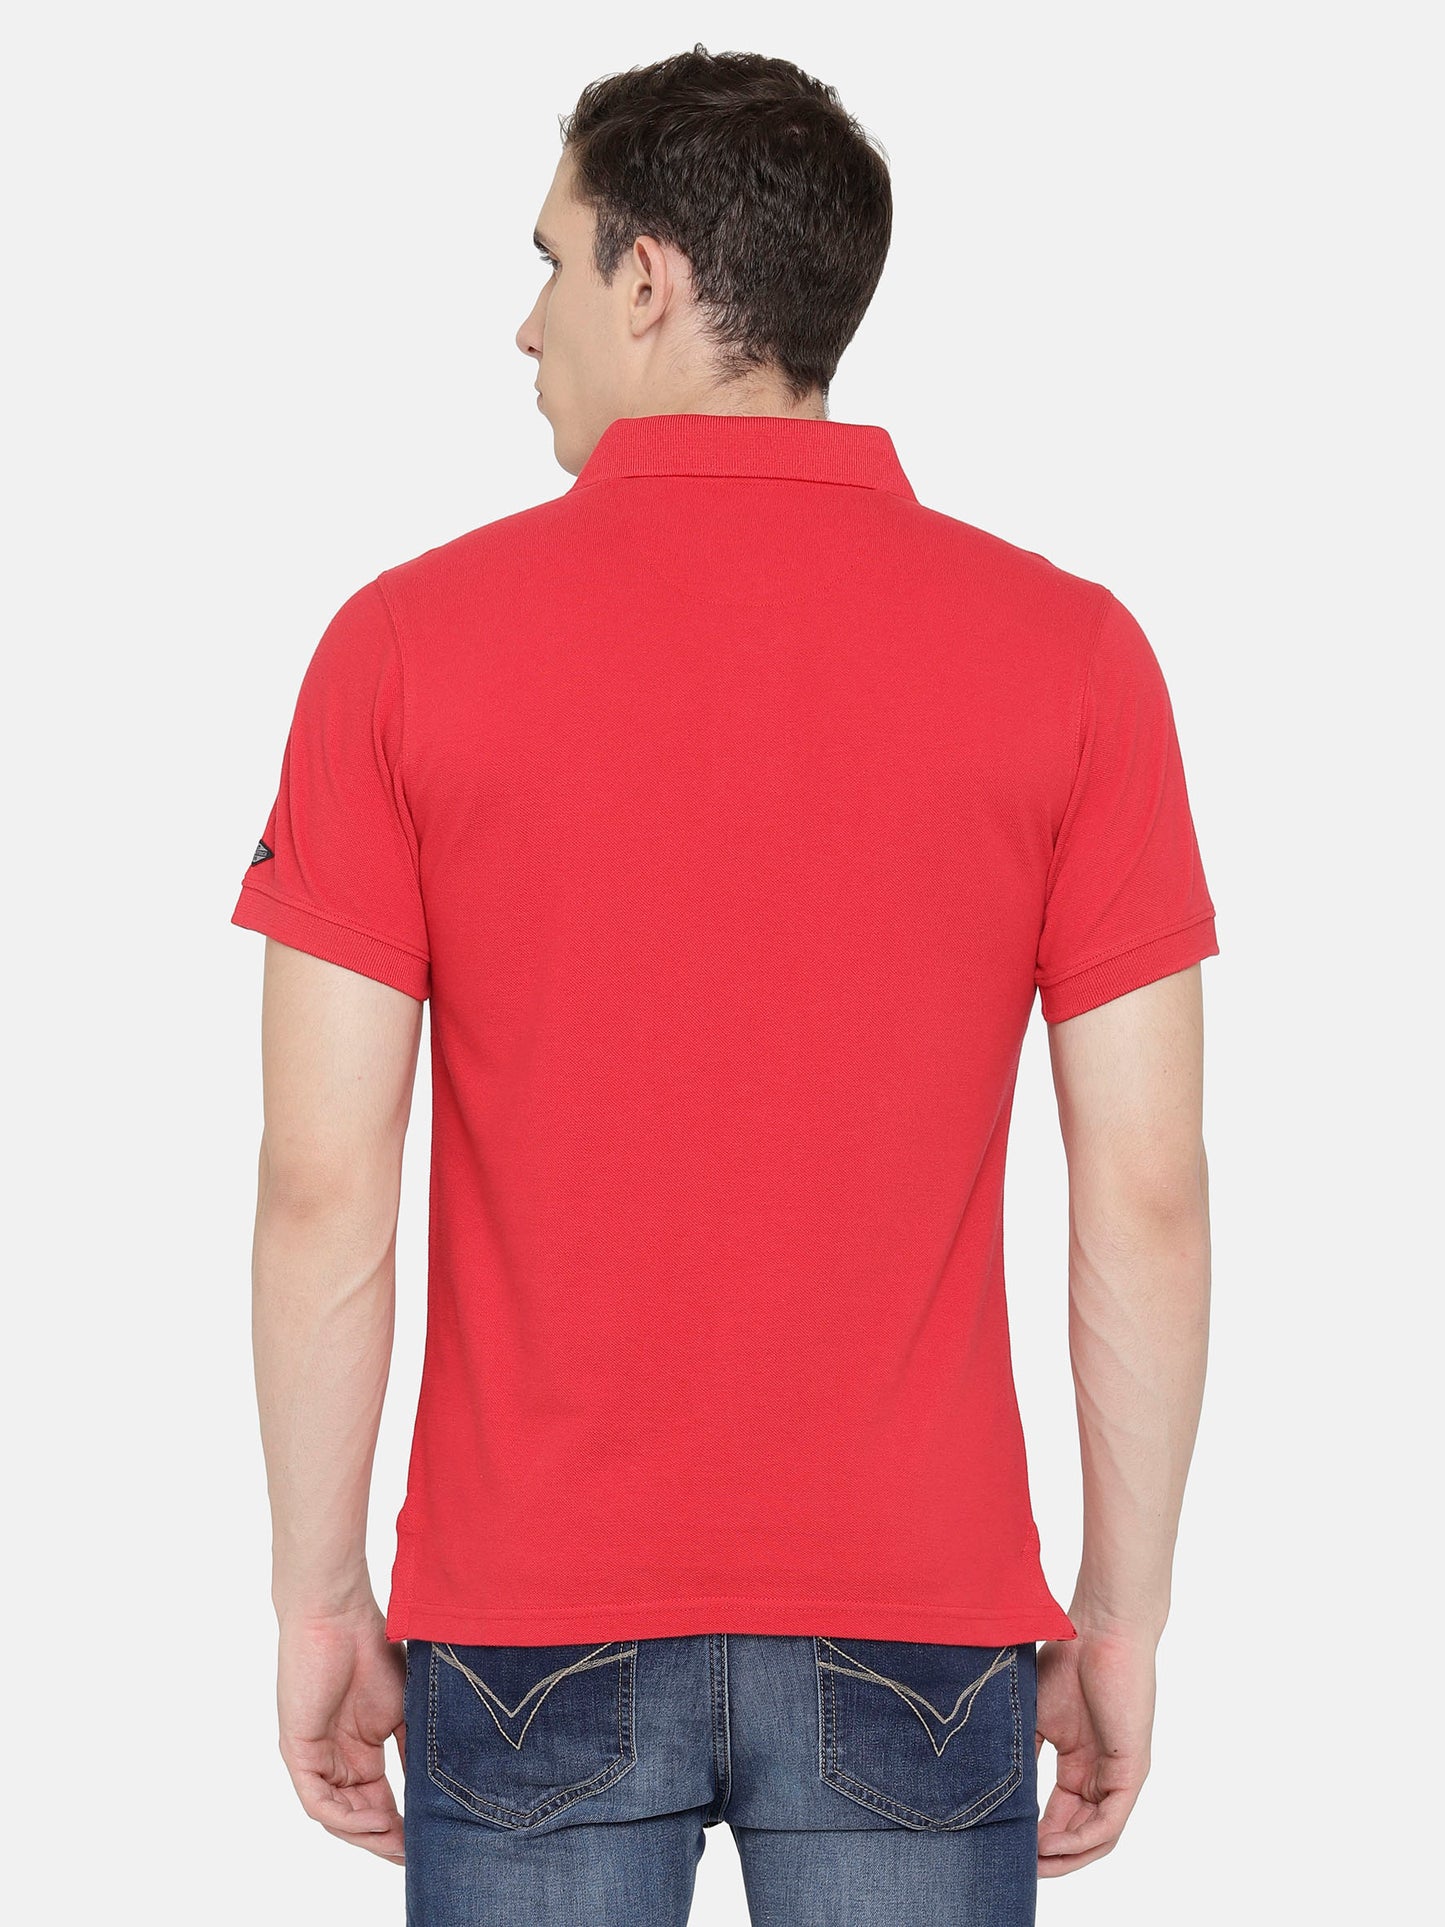 Red Polo T-Shirt pique